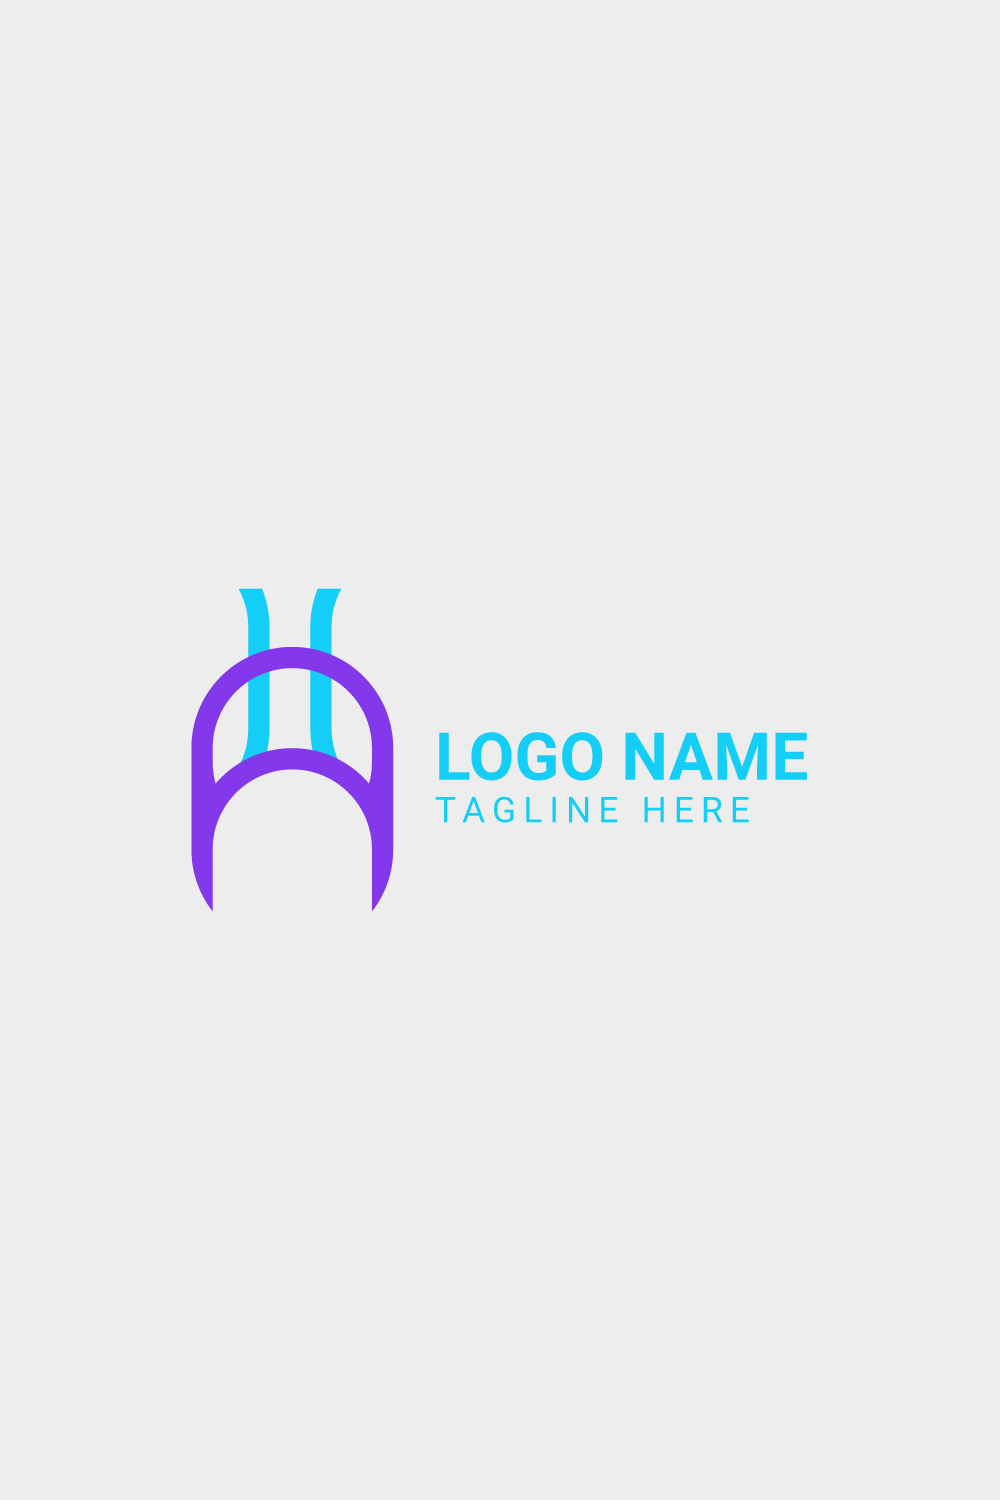 a letter logo design pinterest preview image.